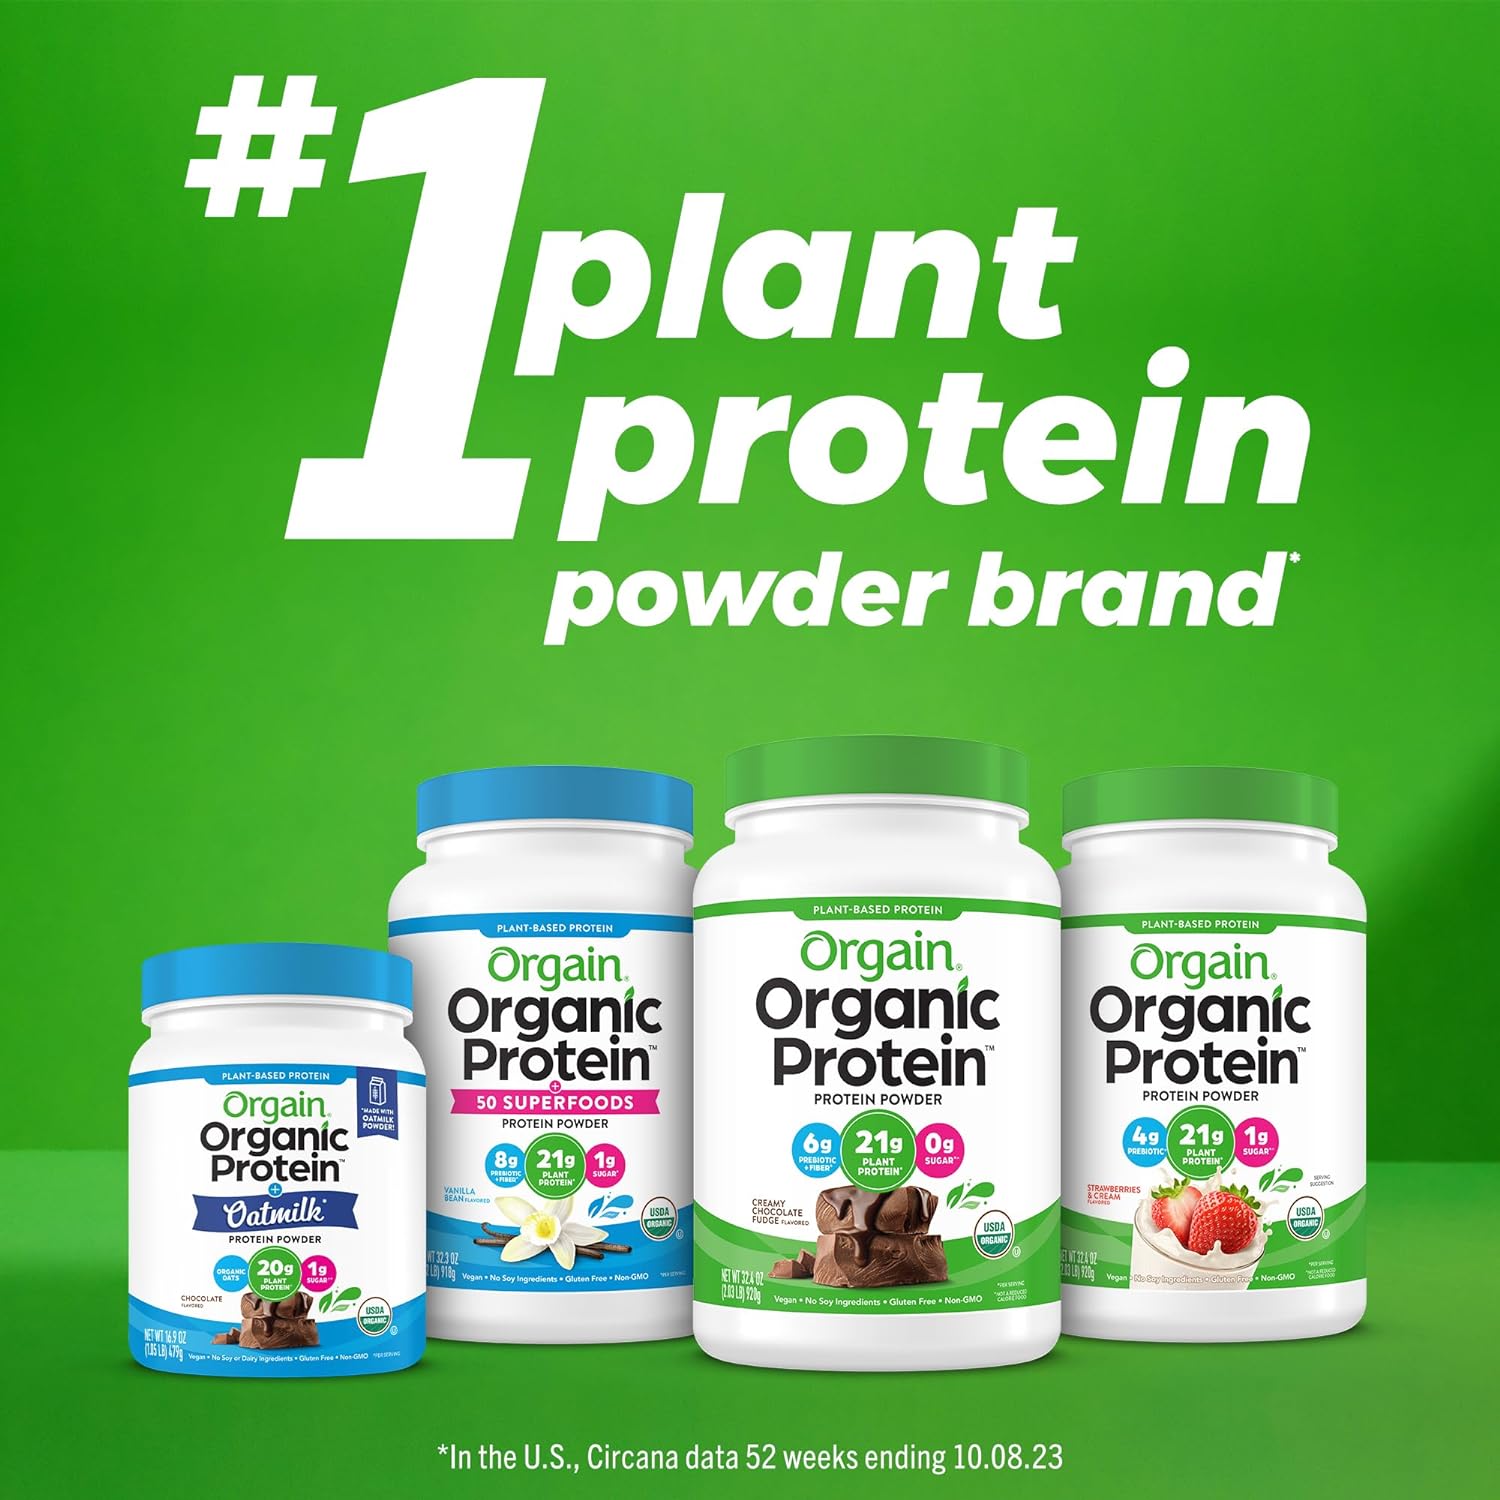 Orgain Organic Vegan Protein Powder, Iced Coffee - 21g Plant Based Pro